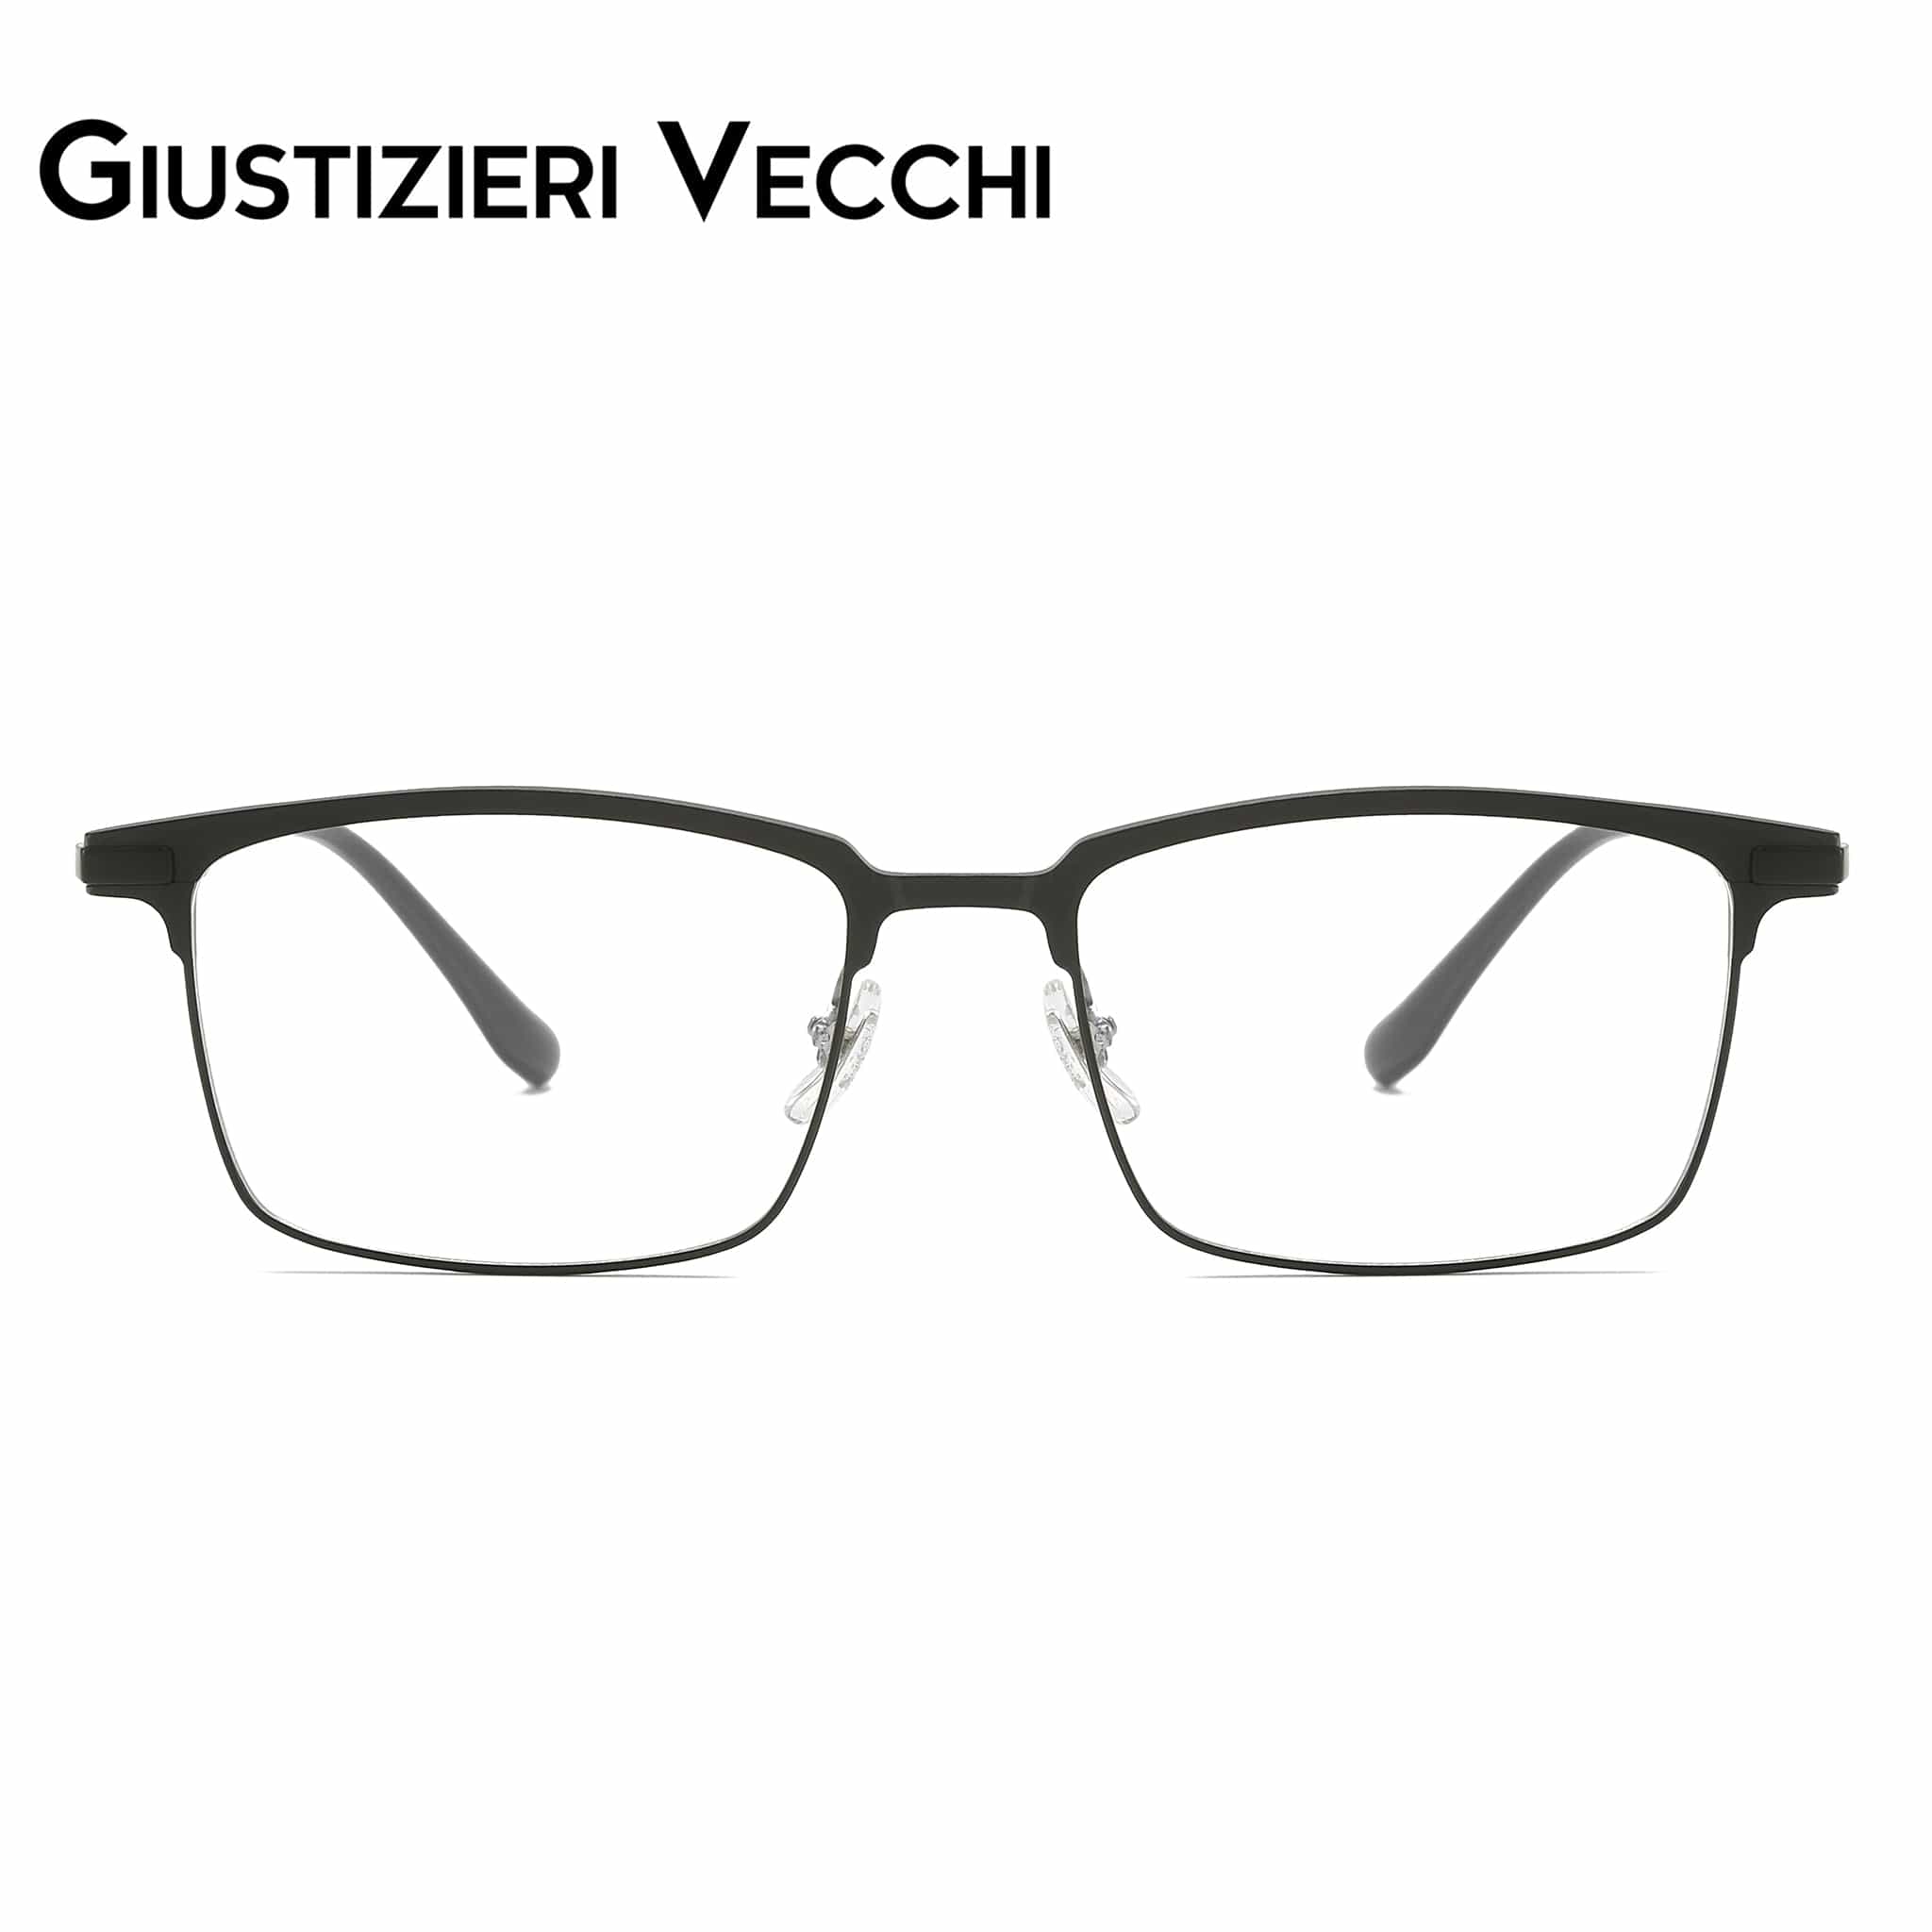 GIUSTIZIERI VECCHI Eyeglasses Medium / Black AuroraBloom Uno